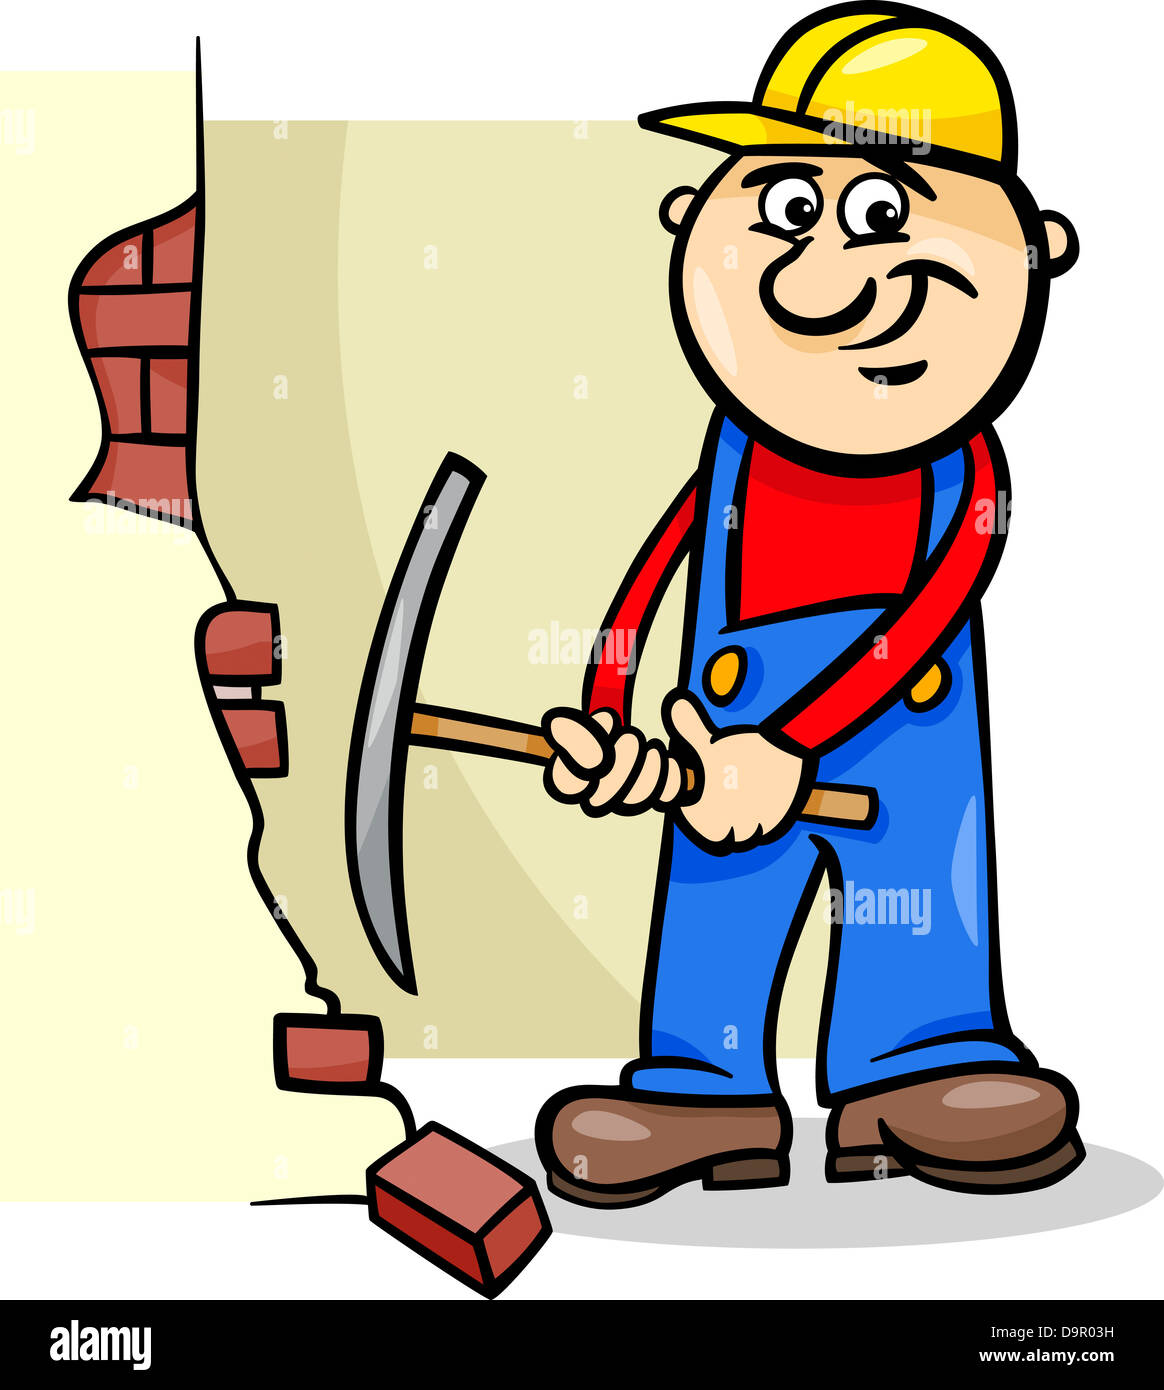 Cartoon Illustration of Man Worker or Workman Demolishing Brick Wall with a Pick Axe Stock Photo